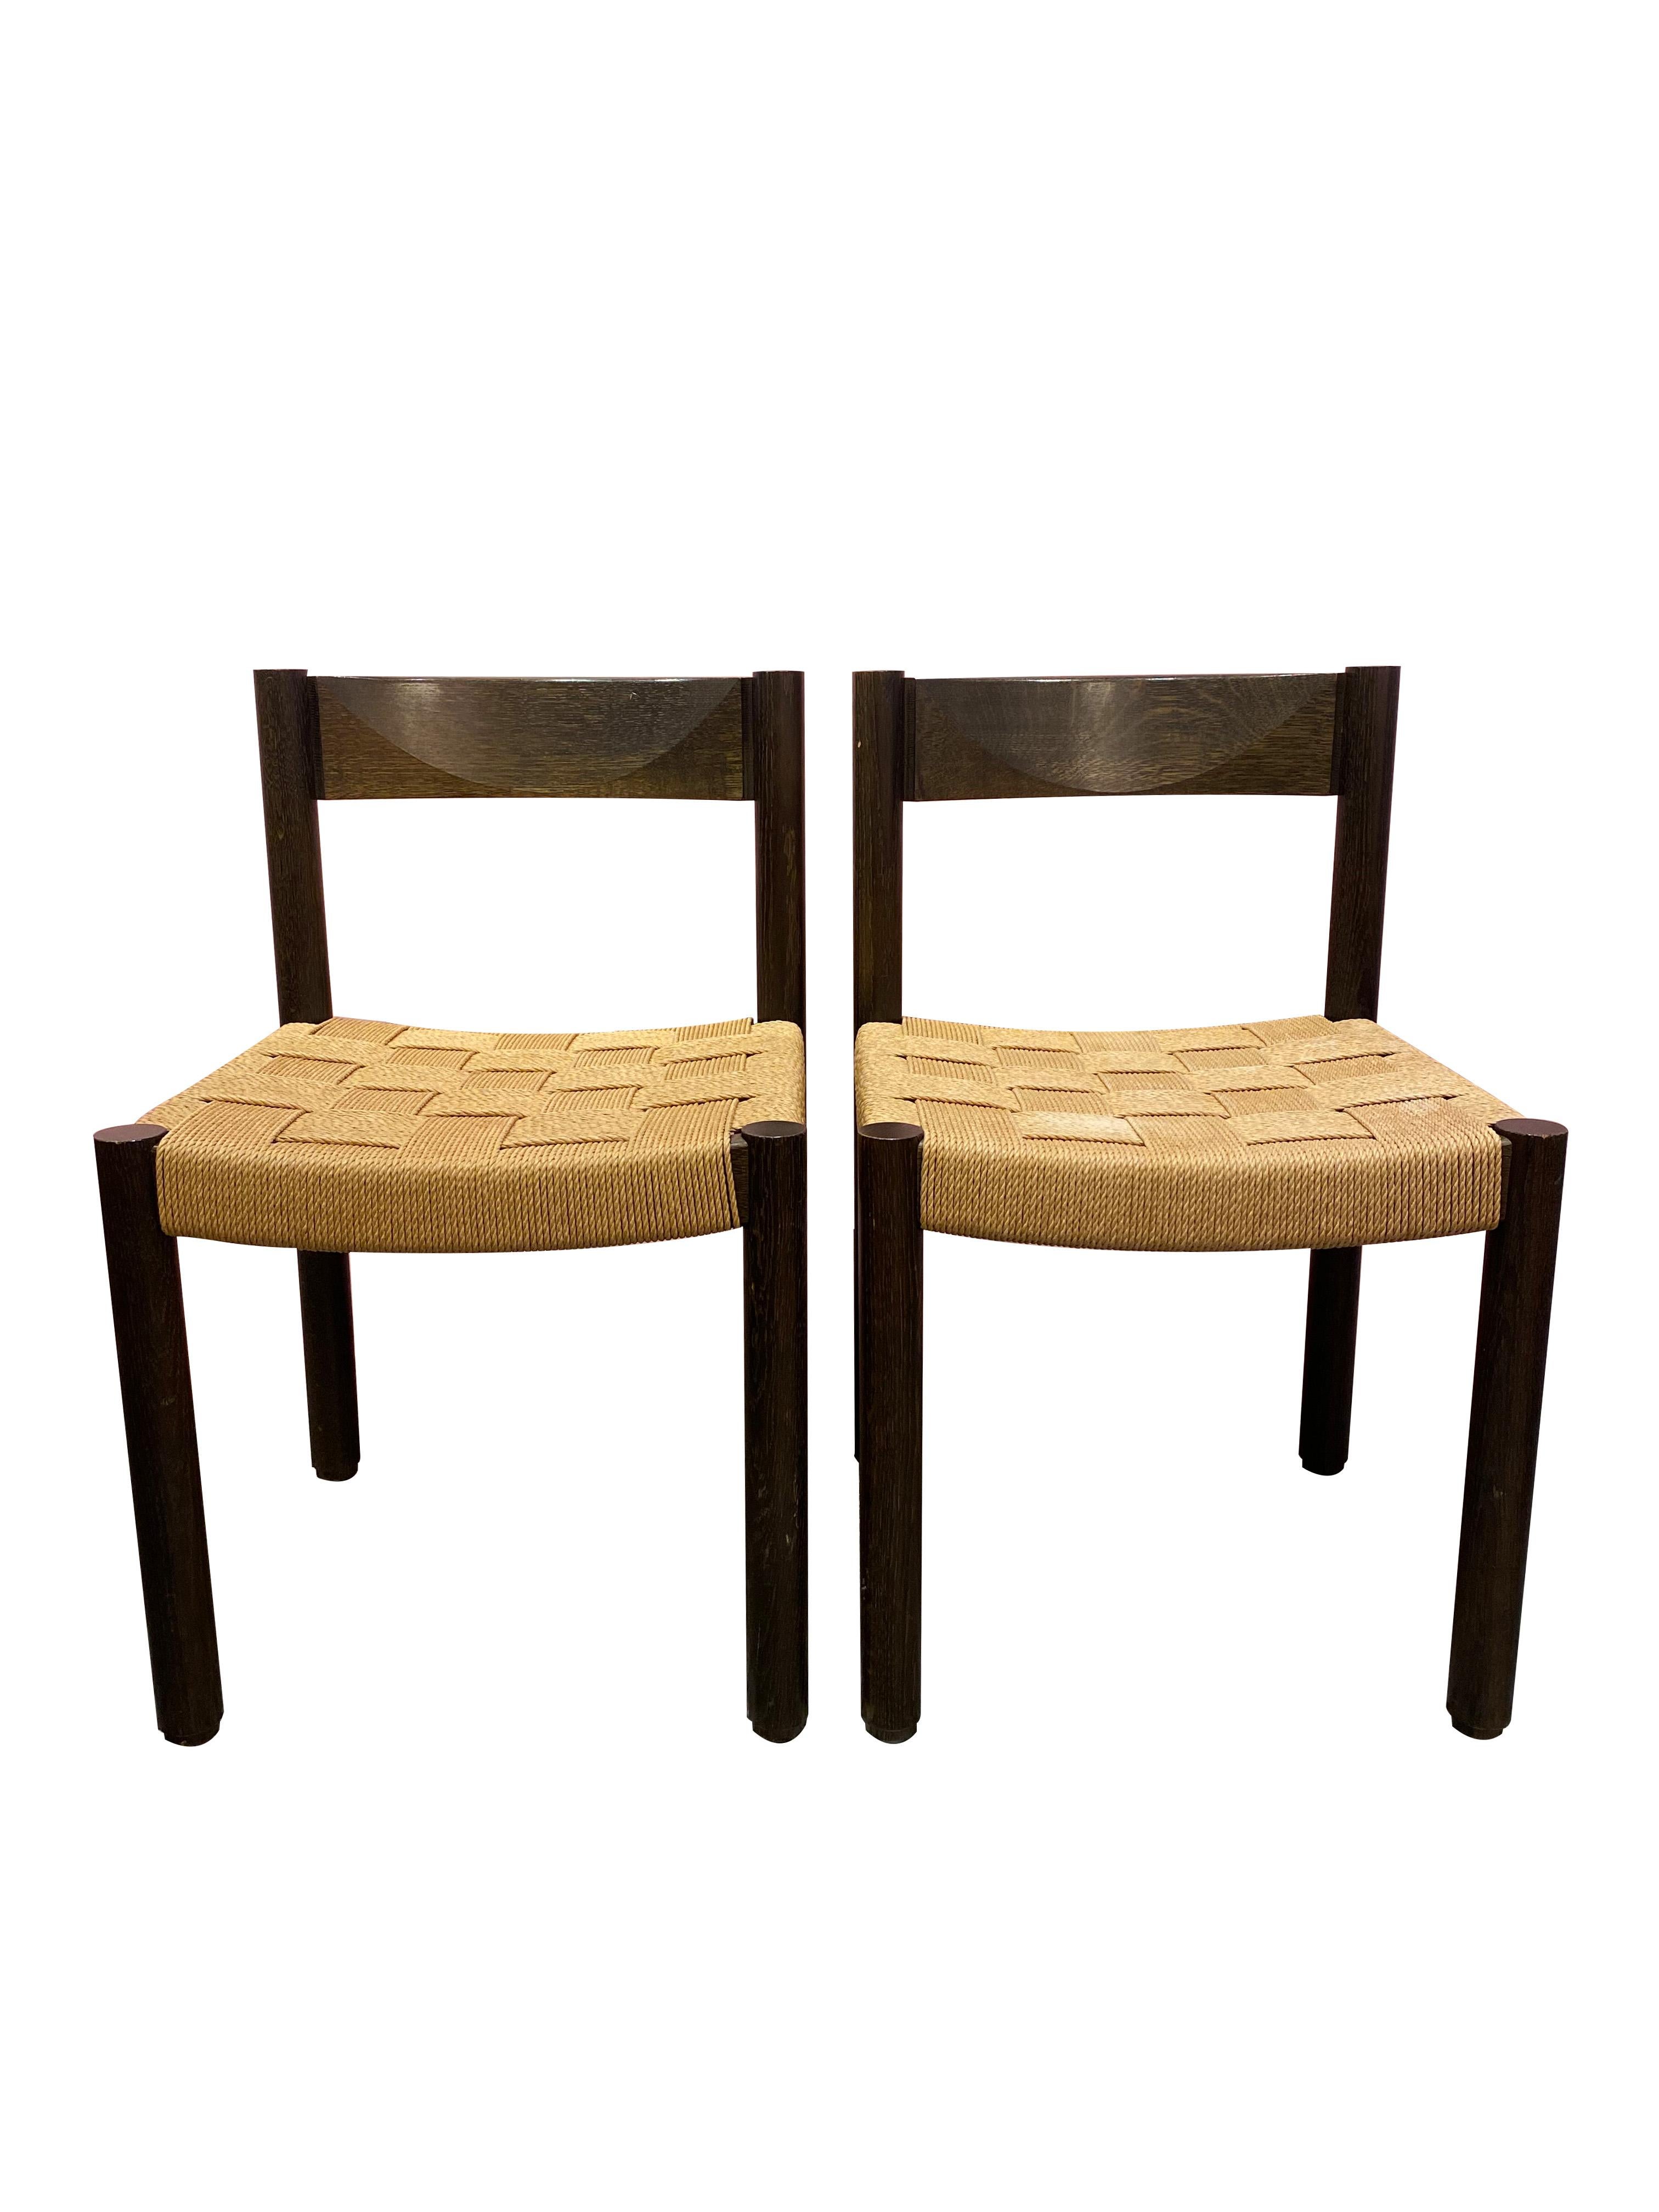 Mid-Century Modern Set of 4 dining chairs by Robert Haussmann for Dietiker, Circa 1960.